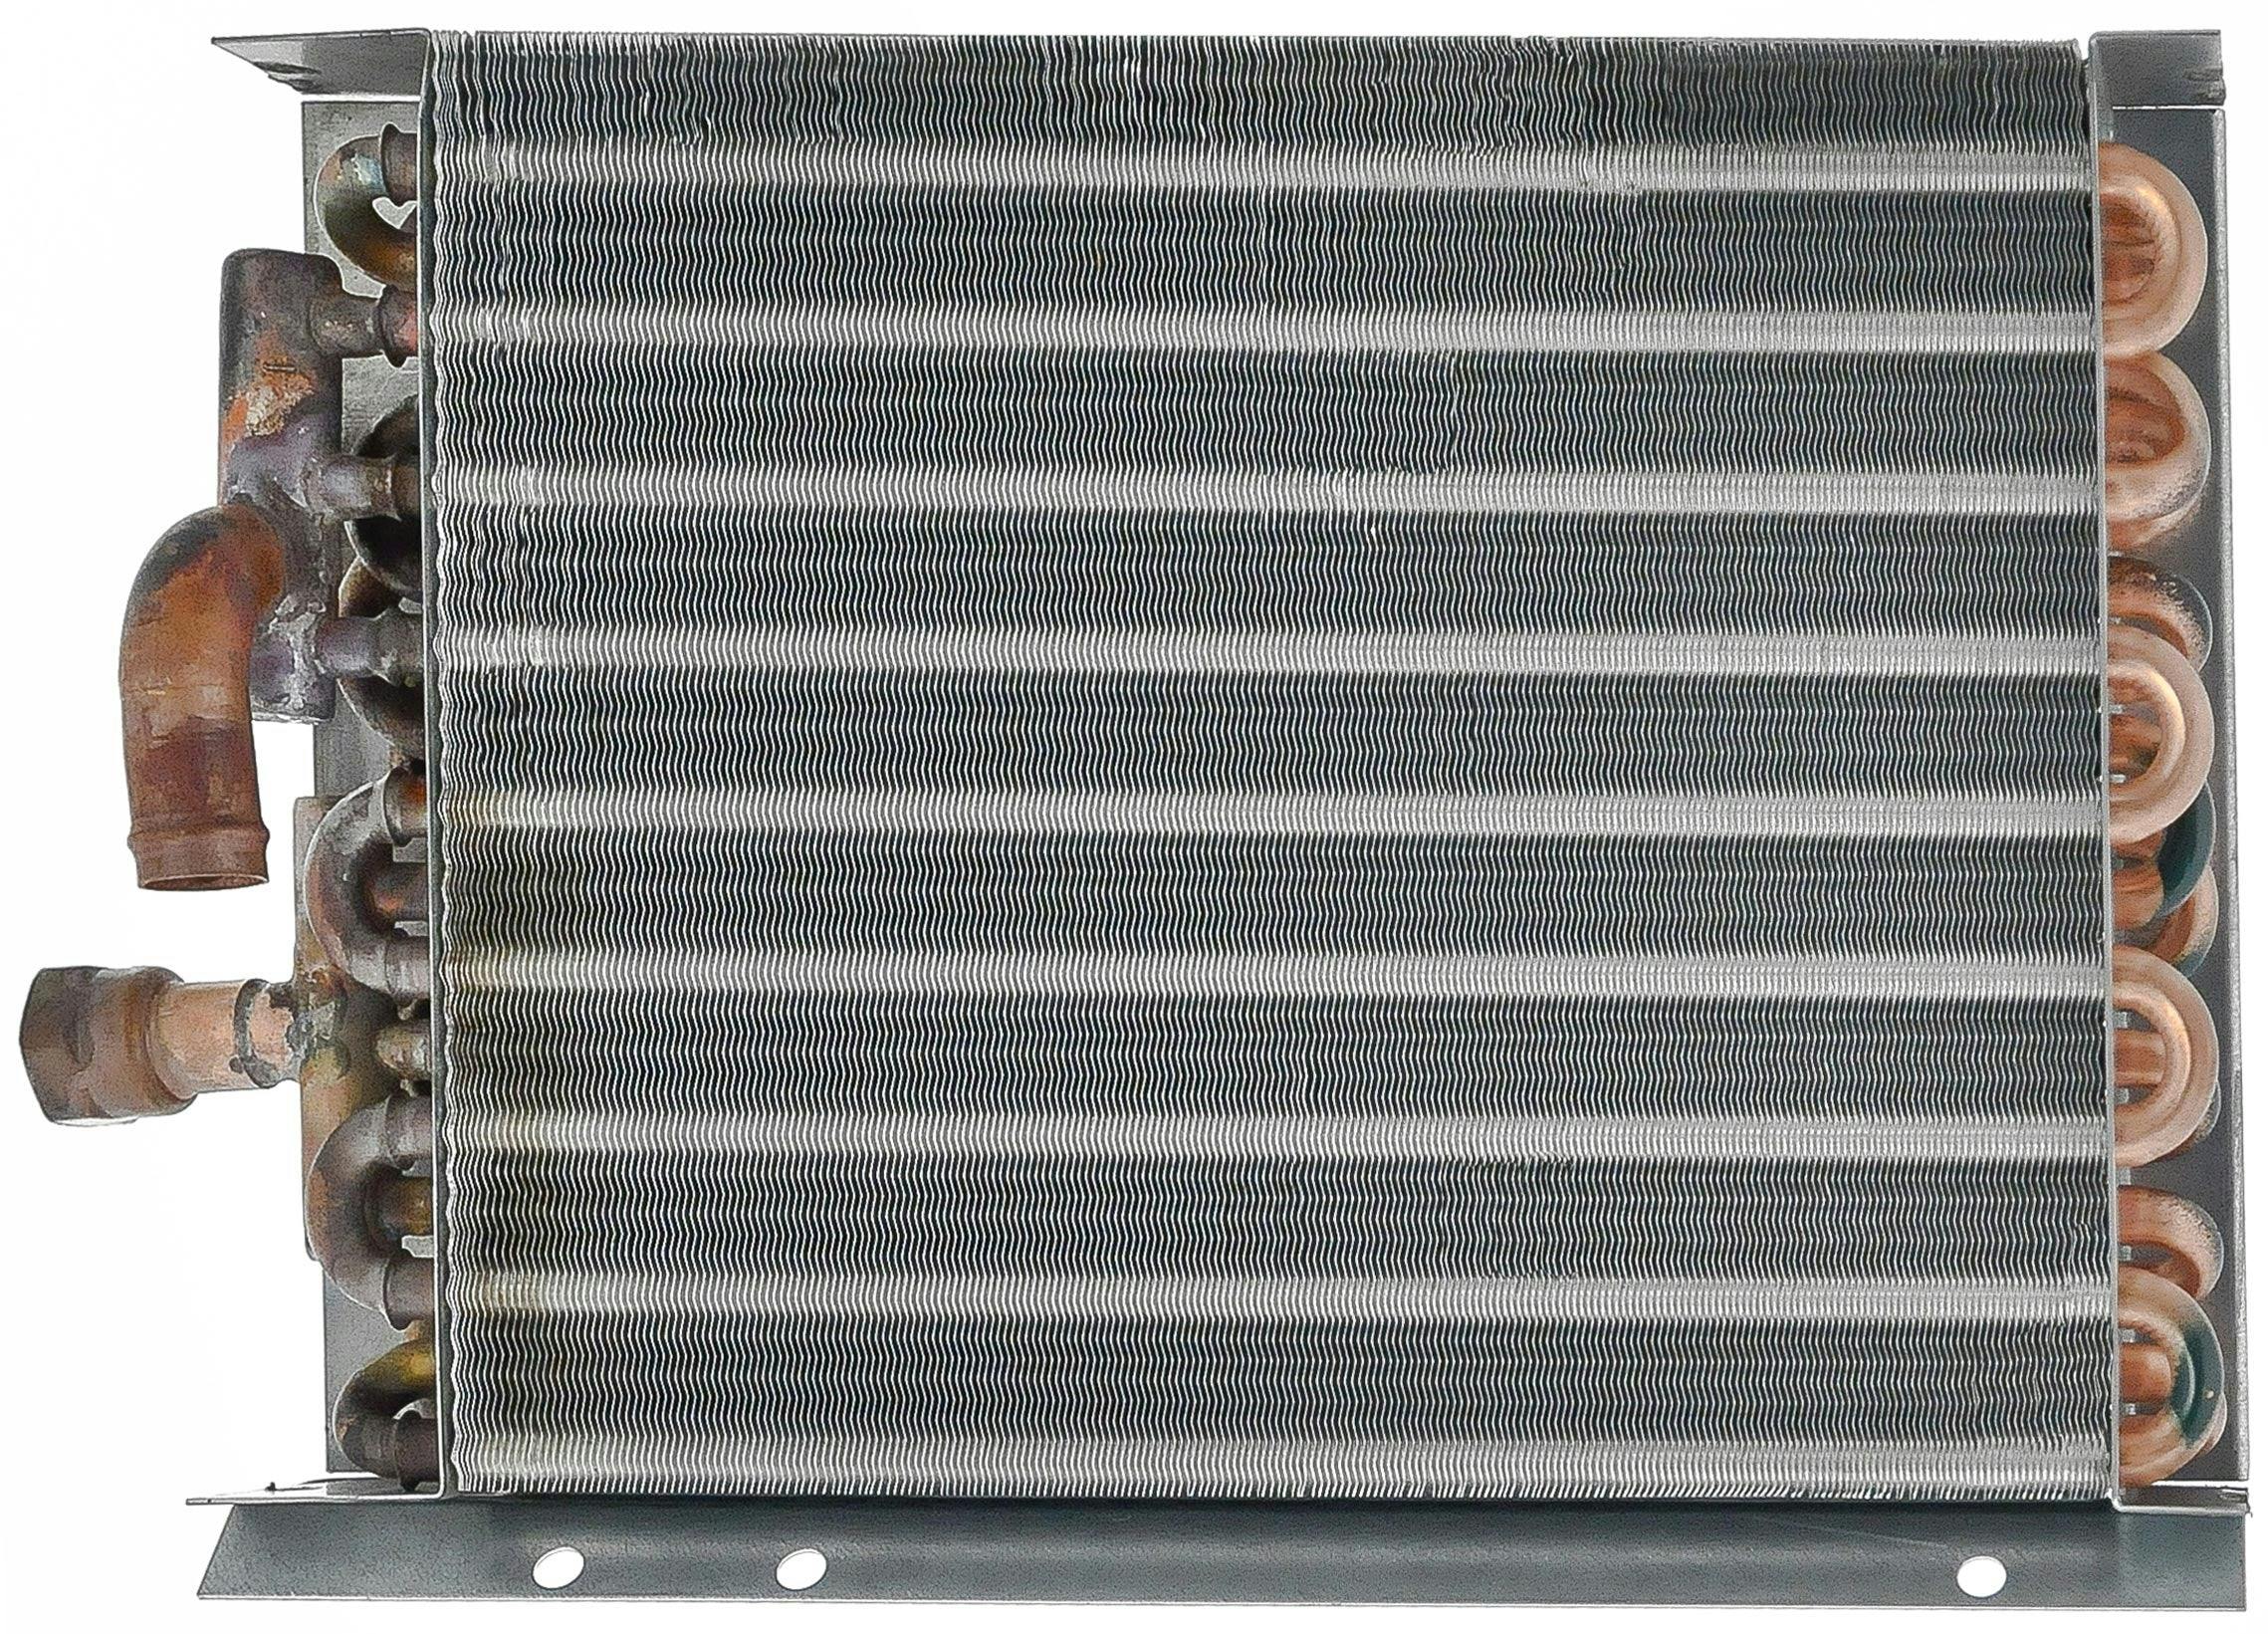 Heater Core, for Navistar - 6840